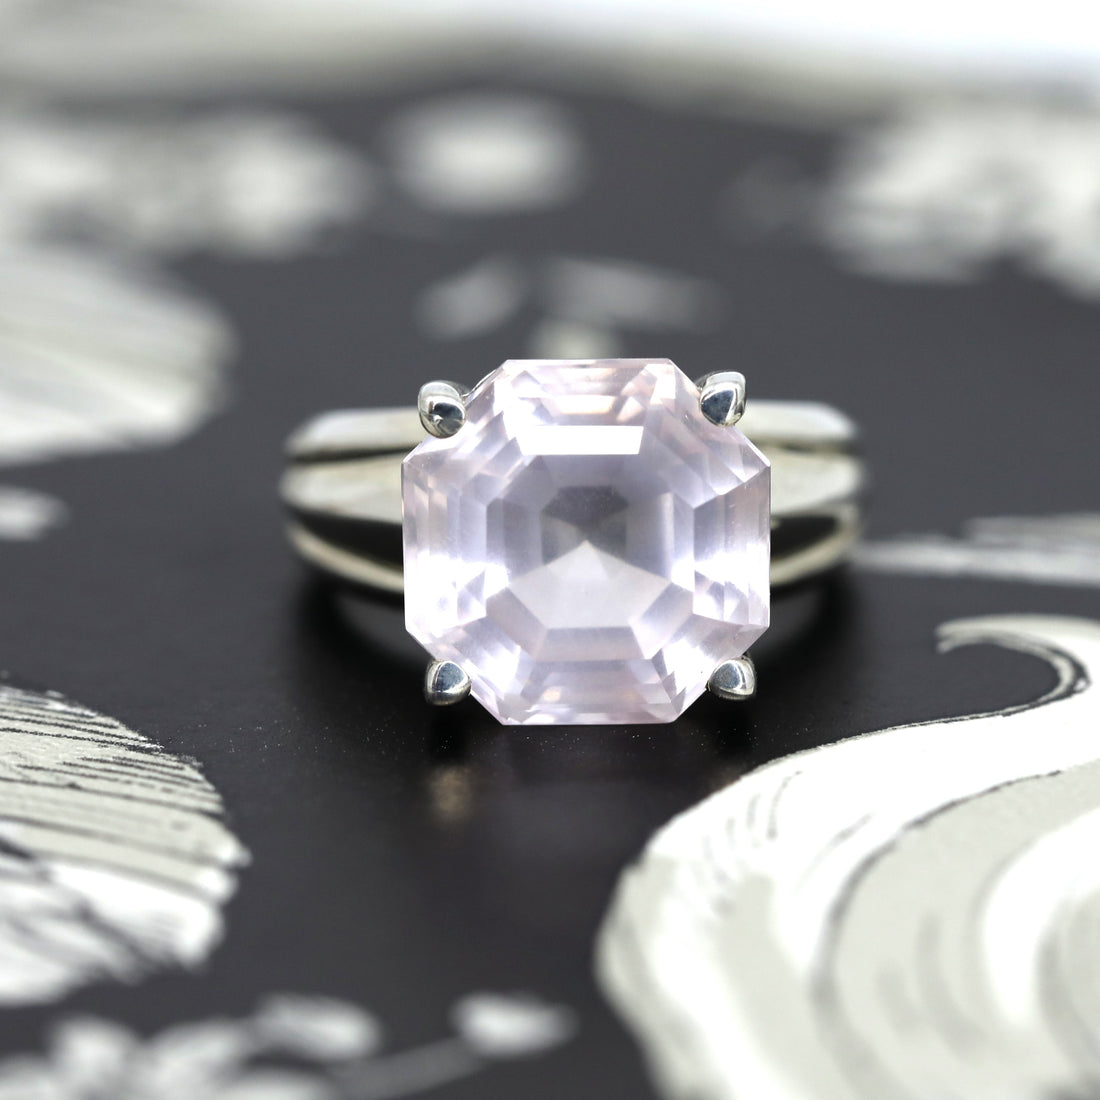 Front view of hexagonal rose quartz gemstone ring bena jewelry edgy jewelry montreal handmade in canada pink bold gems custom made ring fine jewelry